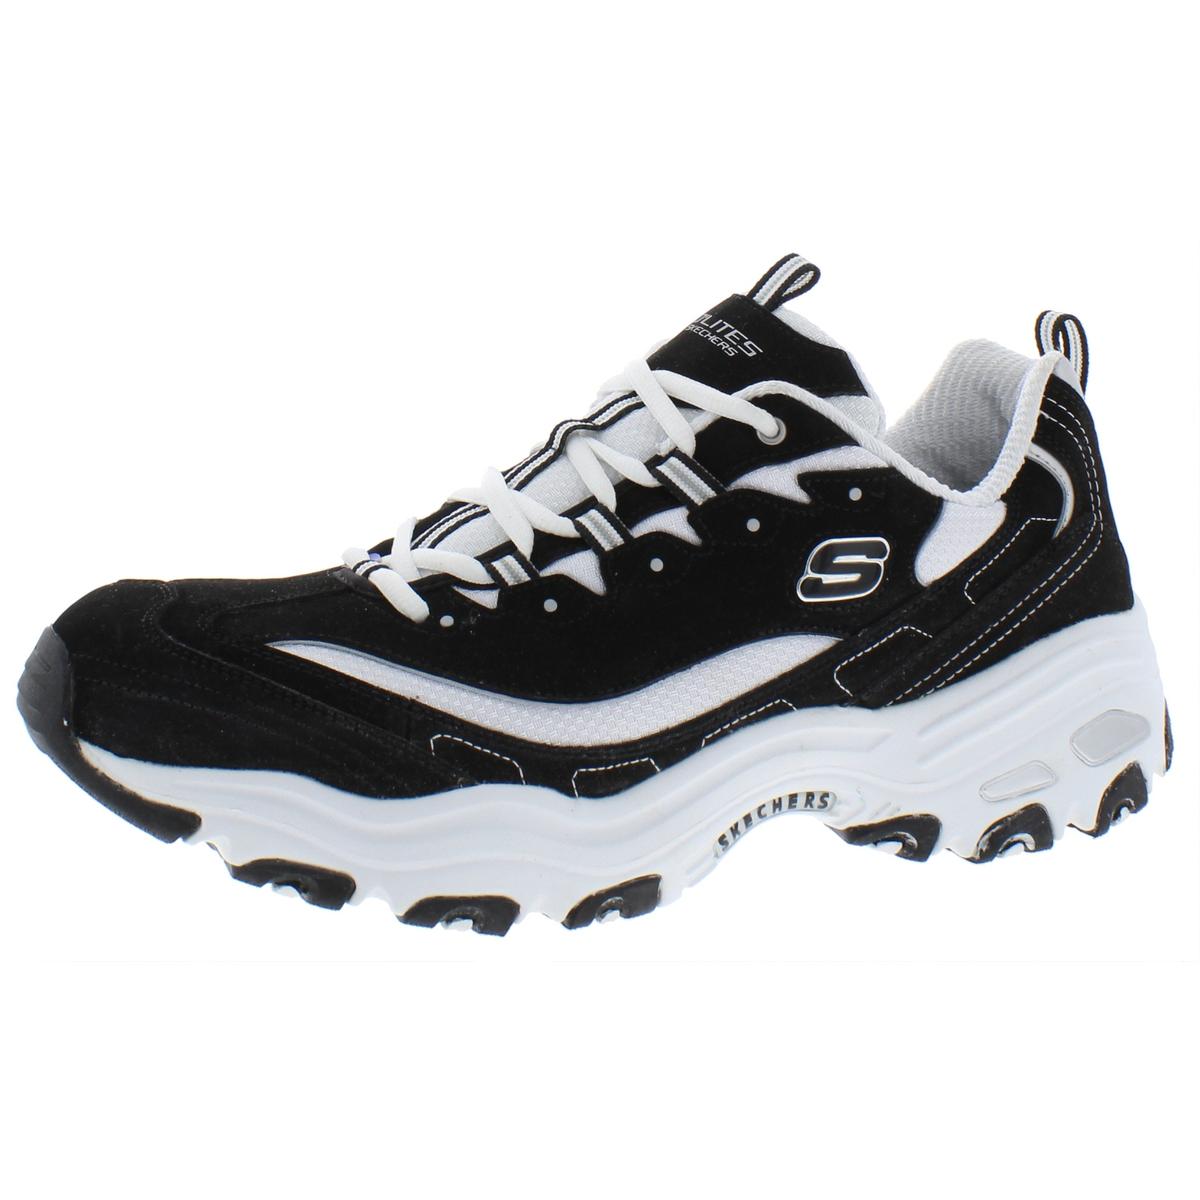 Skechers Mens D'Lites B/W Athletic Shoes Sneakers 13 Medium (D) BHFO ...